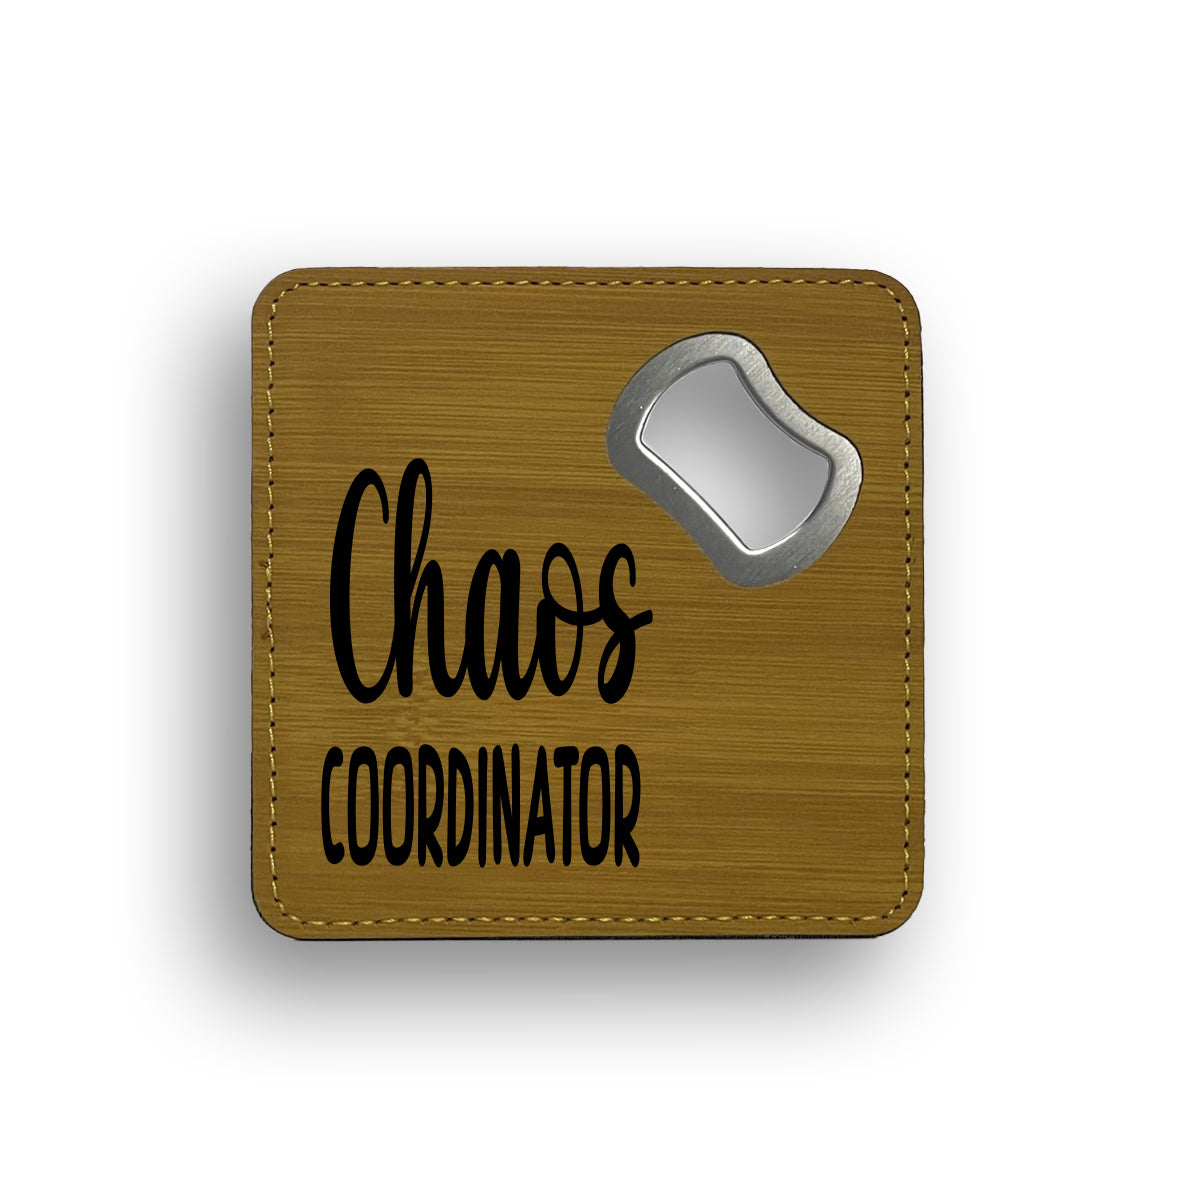 Chaos Coordinator Bottle Opener Coaster